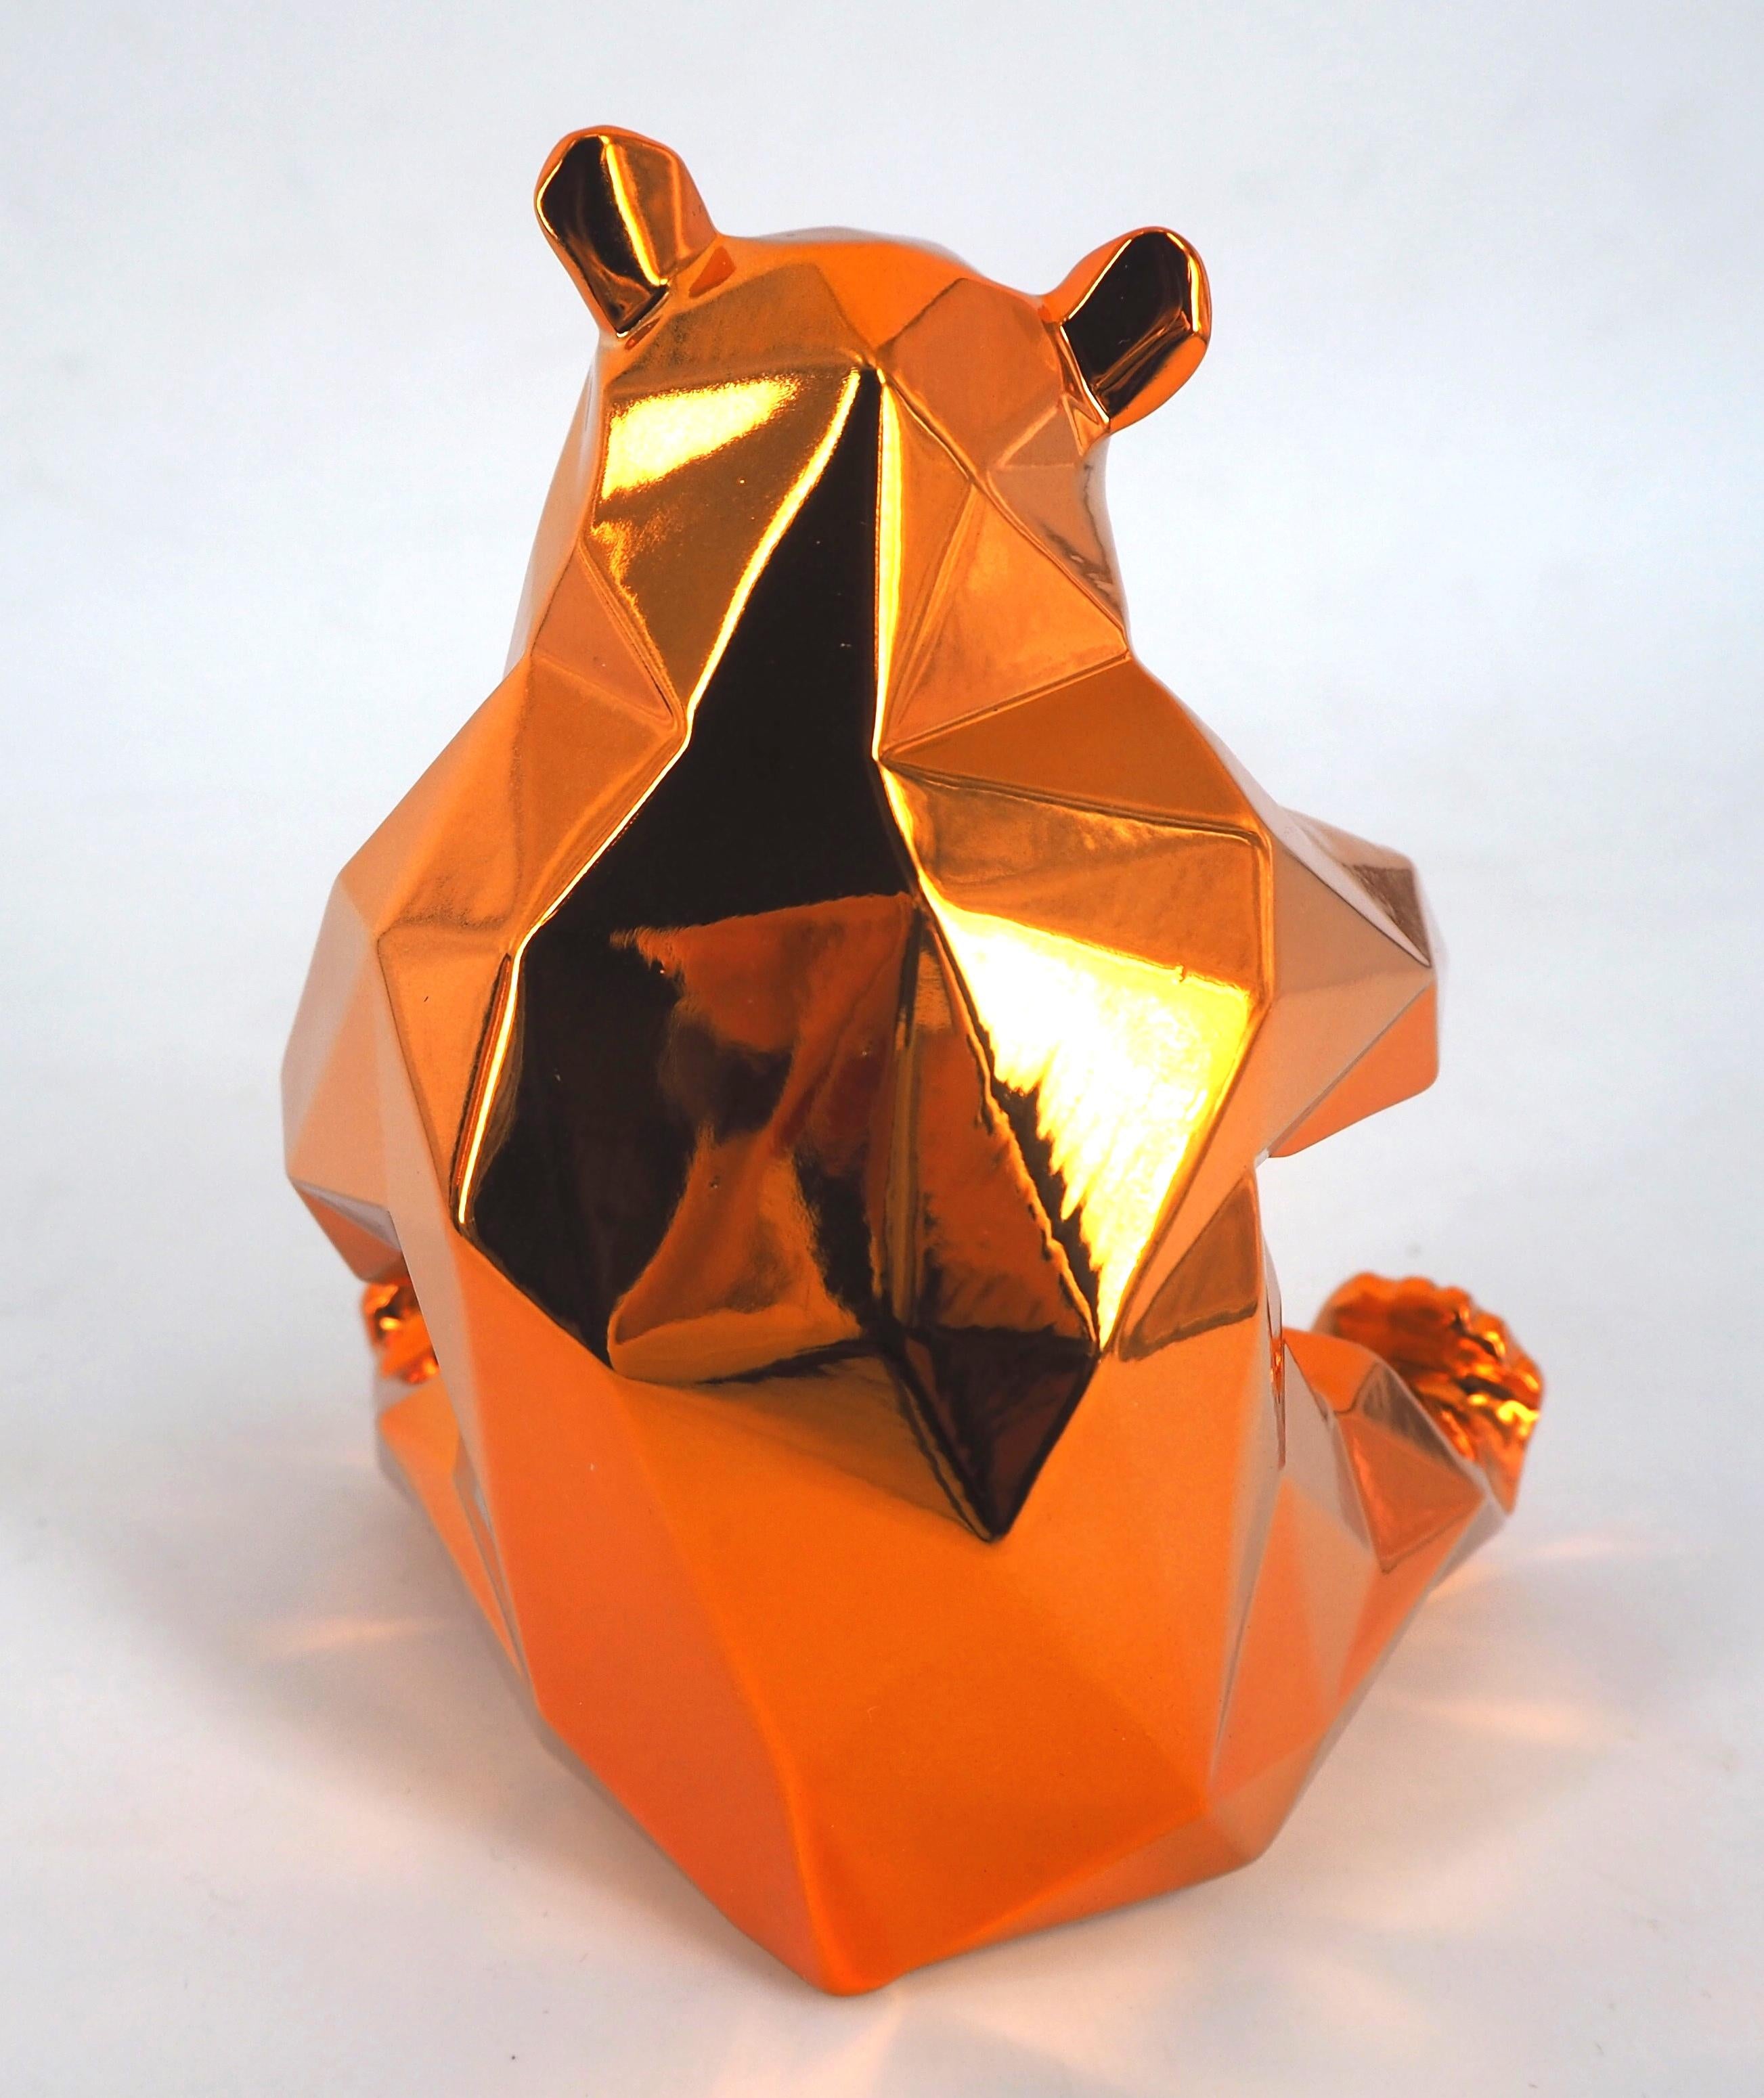 Panda Spirit (Orange Edition) - Sculpture - Gray Figurative Sculpture by Richard Orlinski